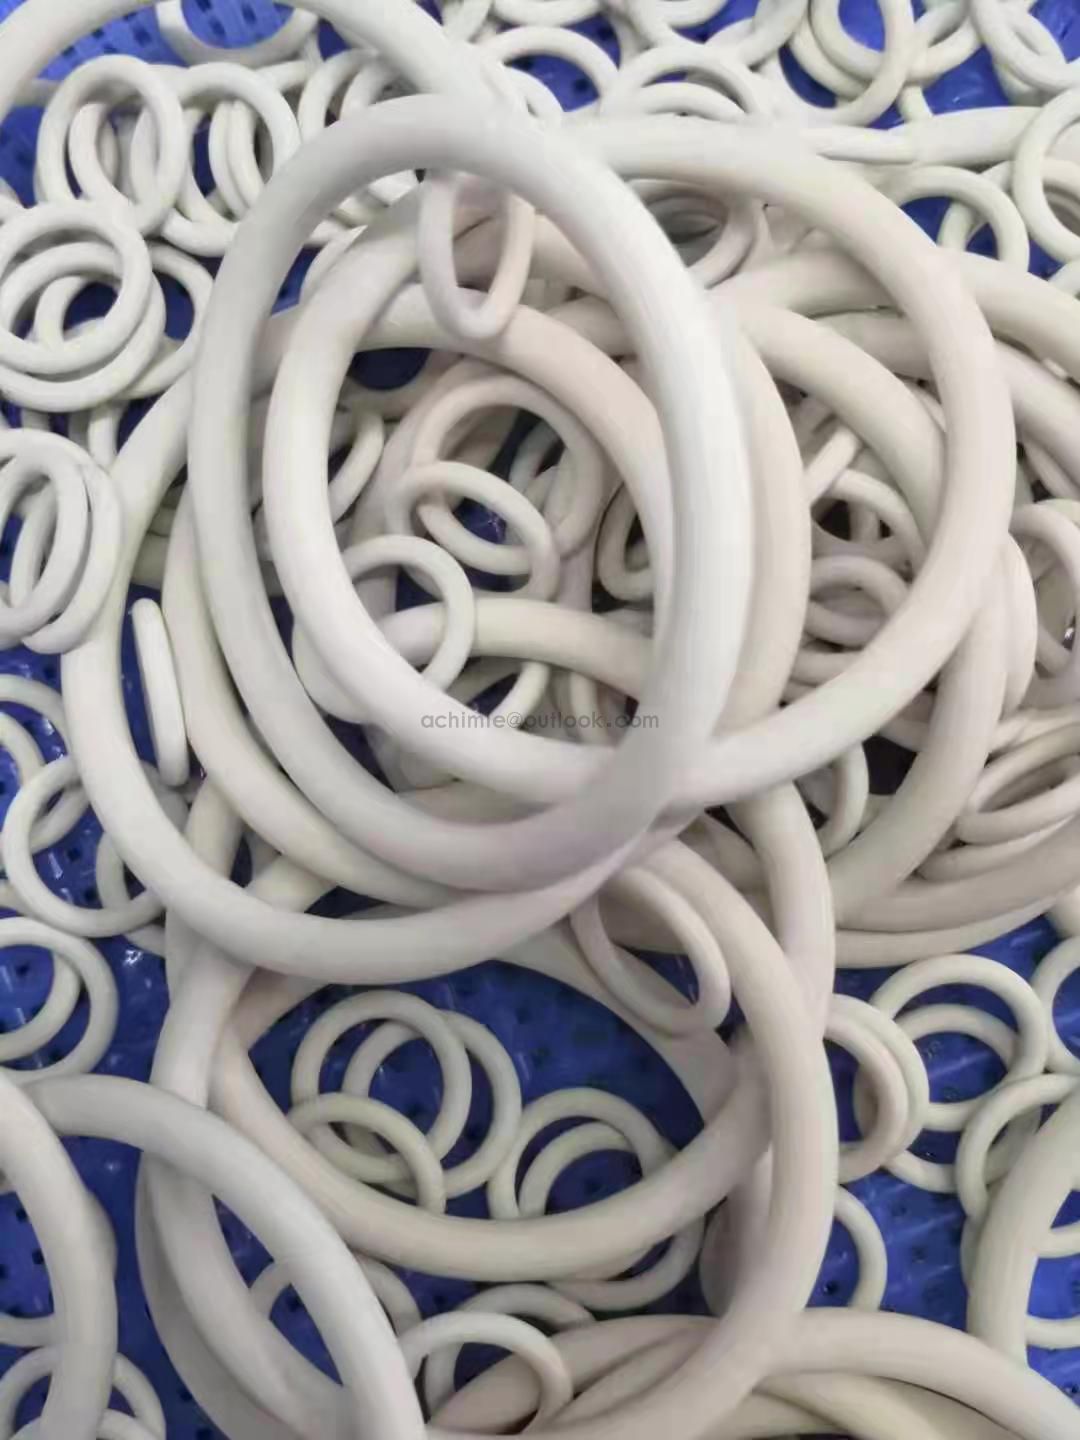  O-rings and parts